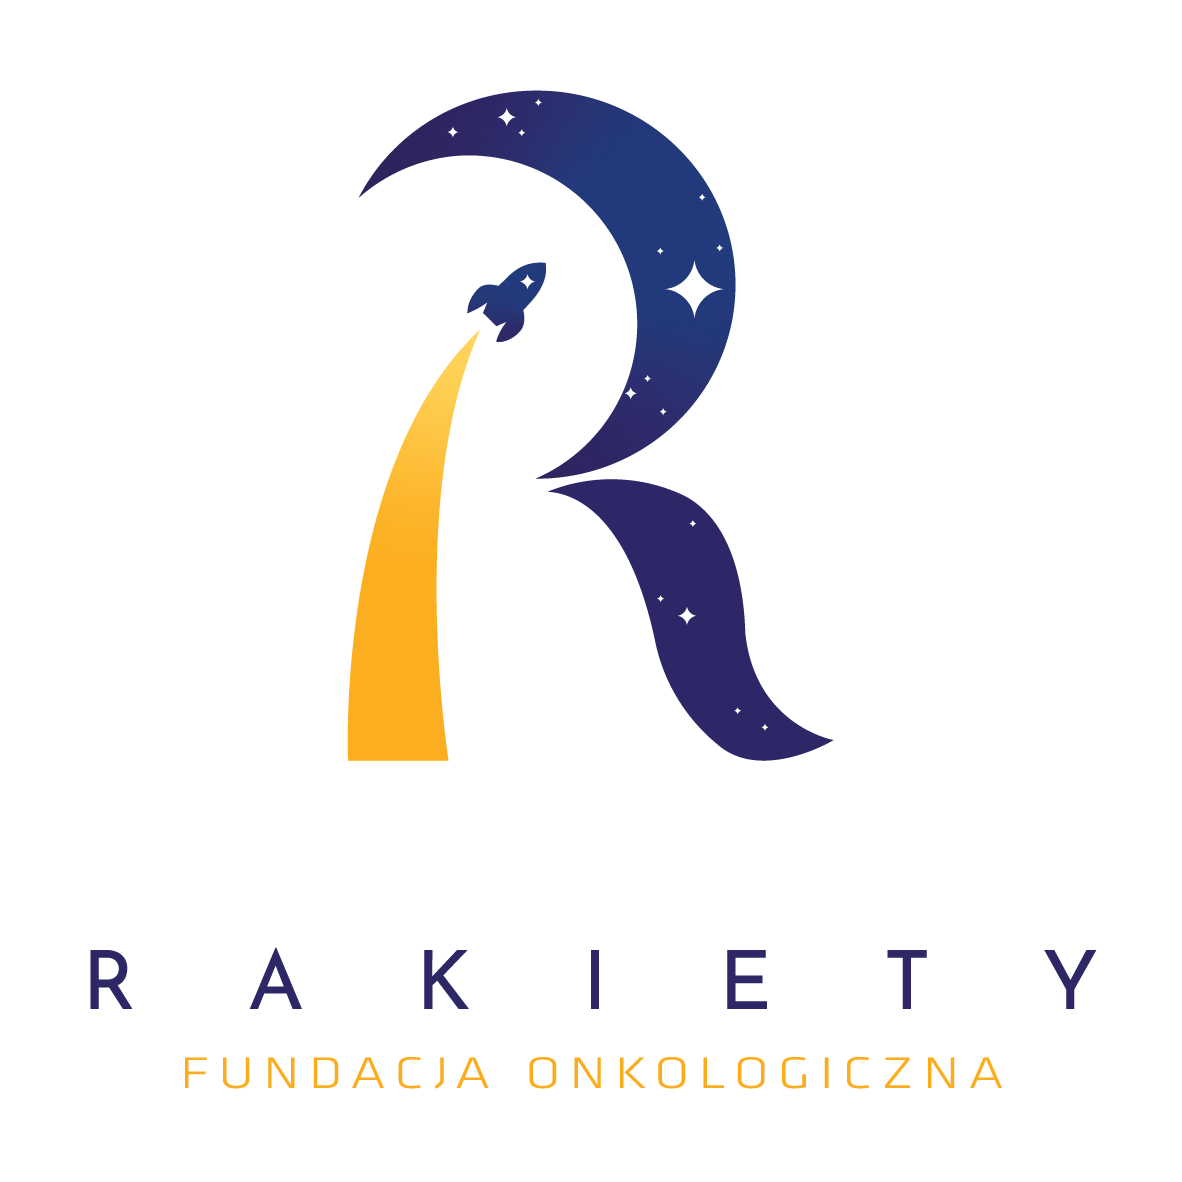 fundacja-onkologiczna-rakiety-onkobaza-pl